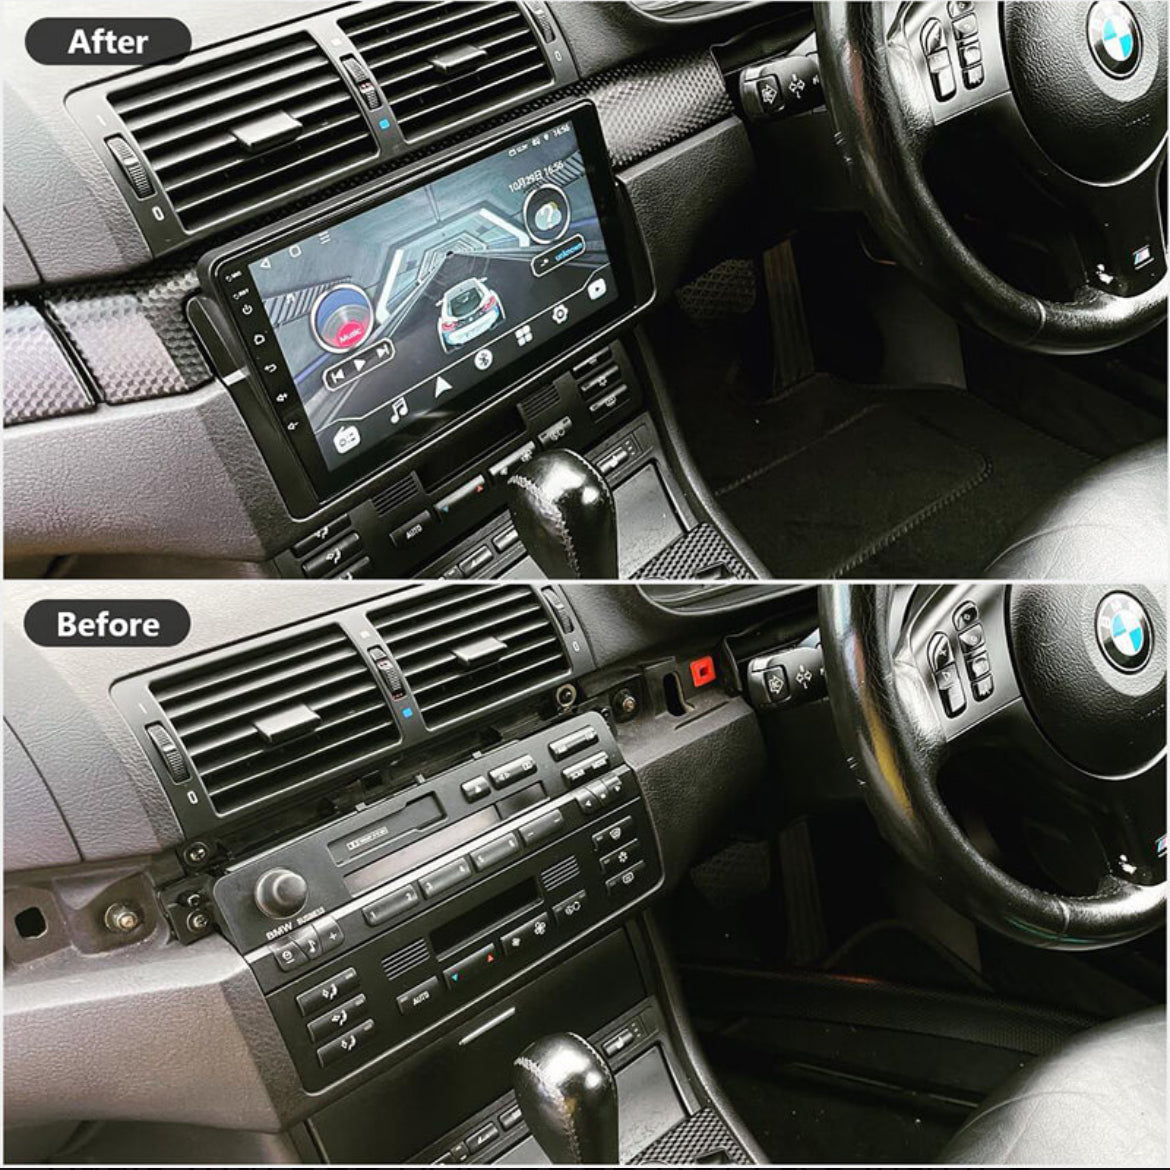 Eonon 8Core 9" Android Car Radio Stereo GPS Sat Nav DSP Head Unit BT For BMW E46